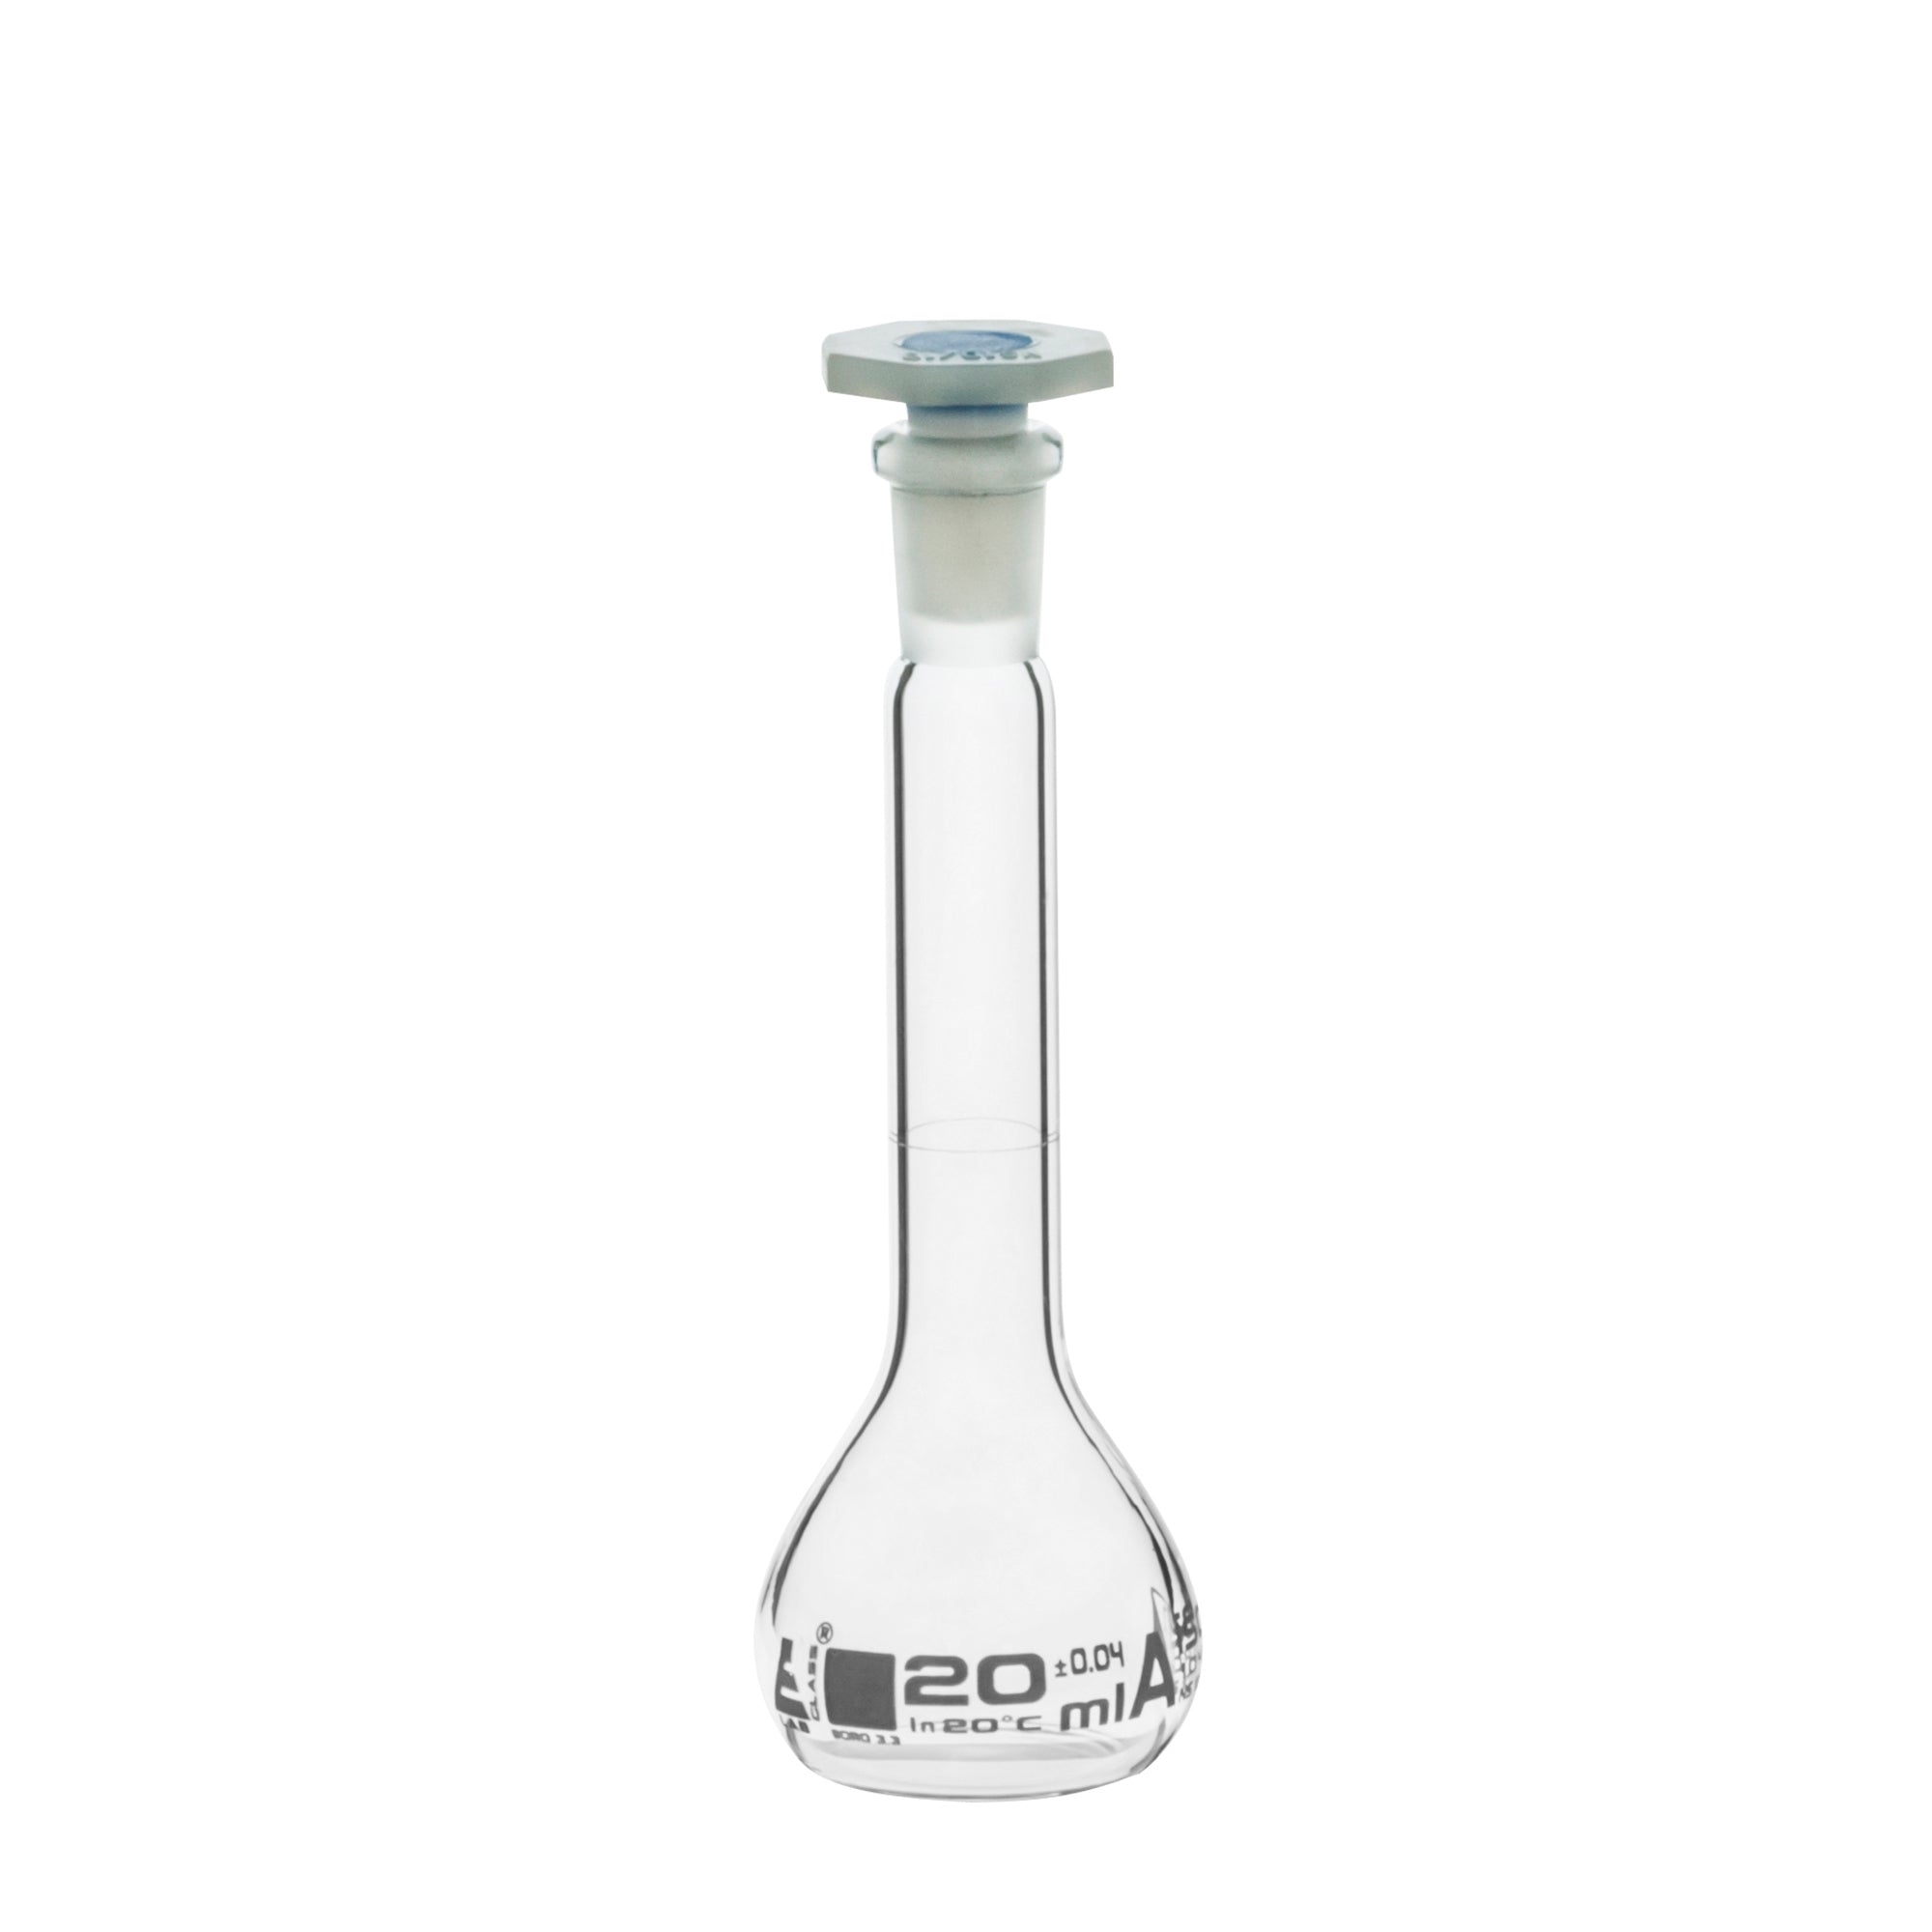 Borosilicate Glass Volumetric Flask with Polyethylene Stopper, 20ml, Class A, White Print, Autoclavable